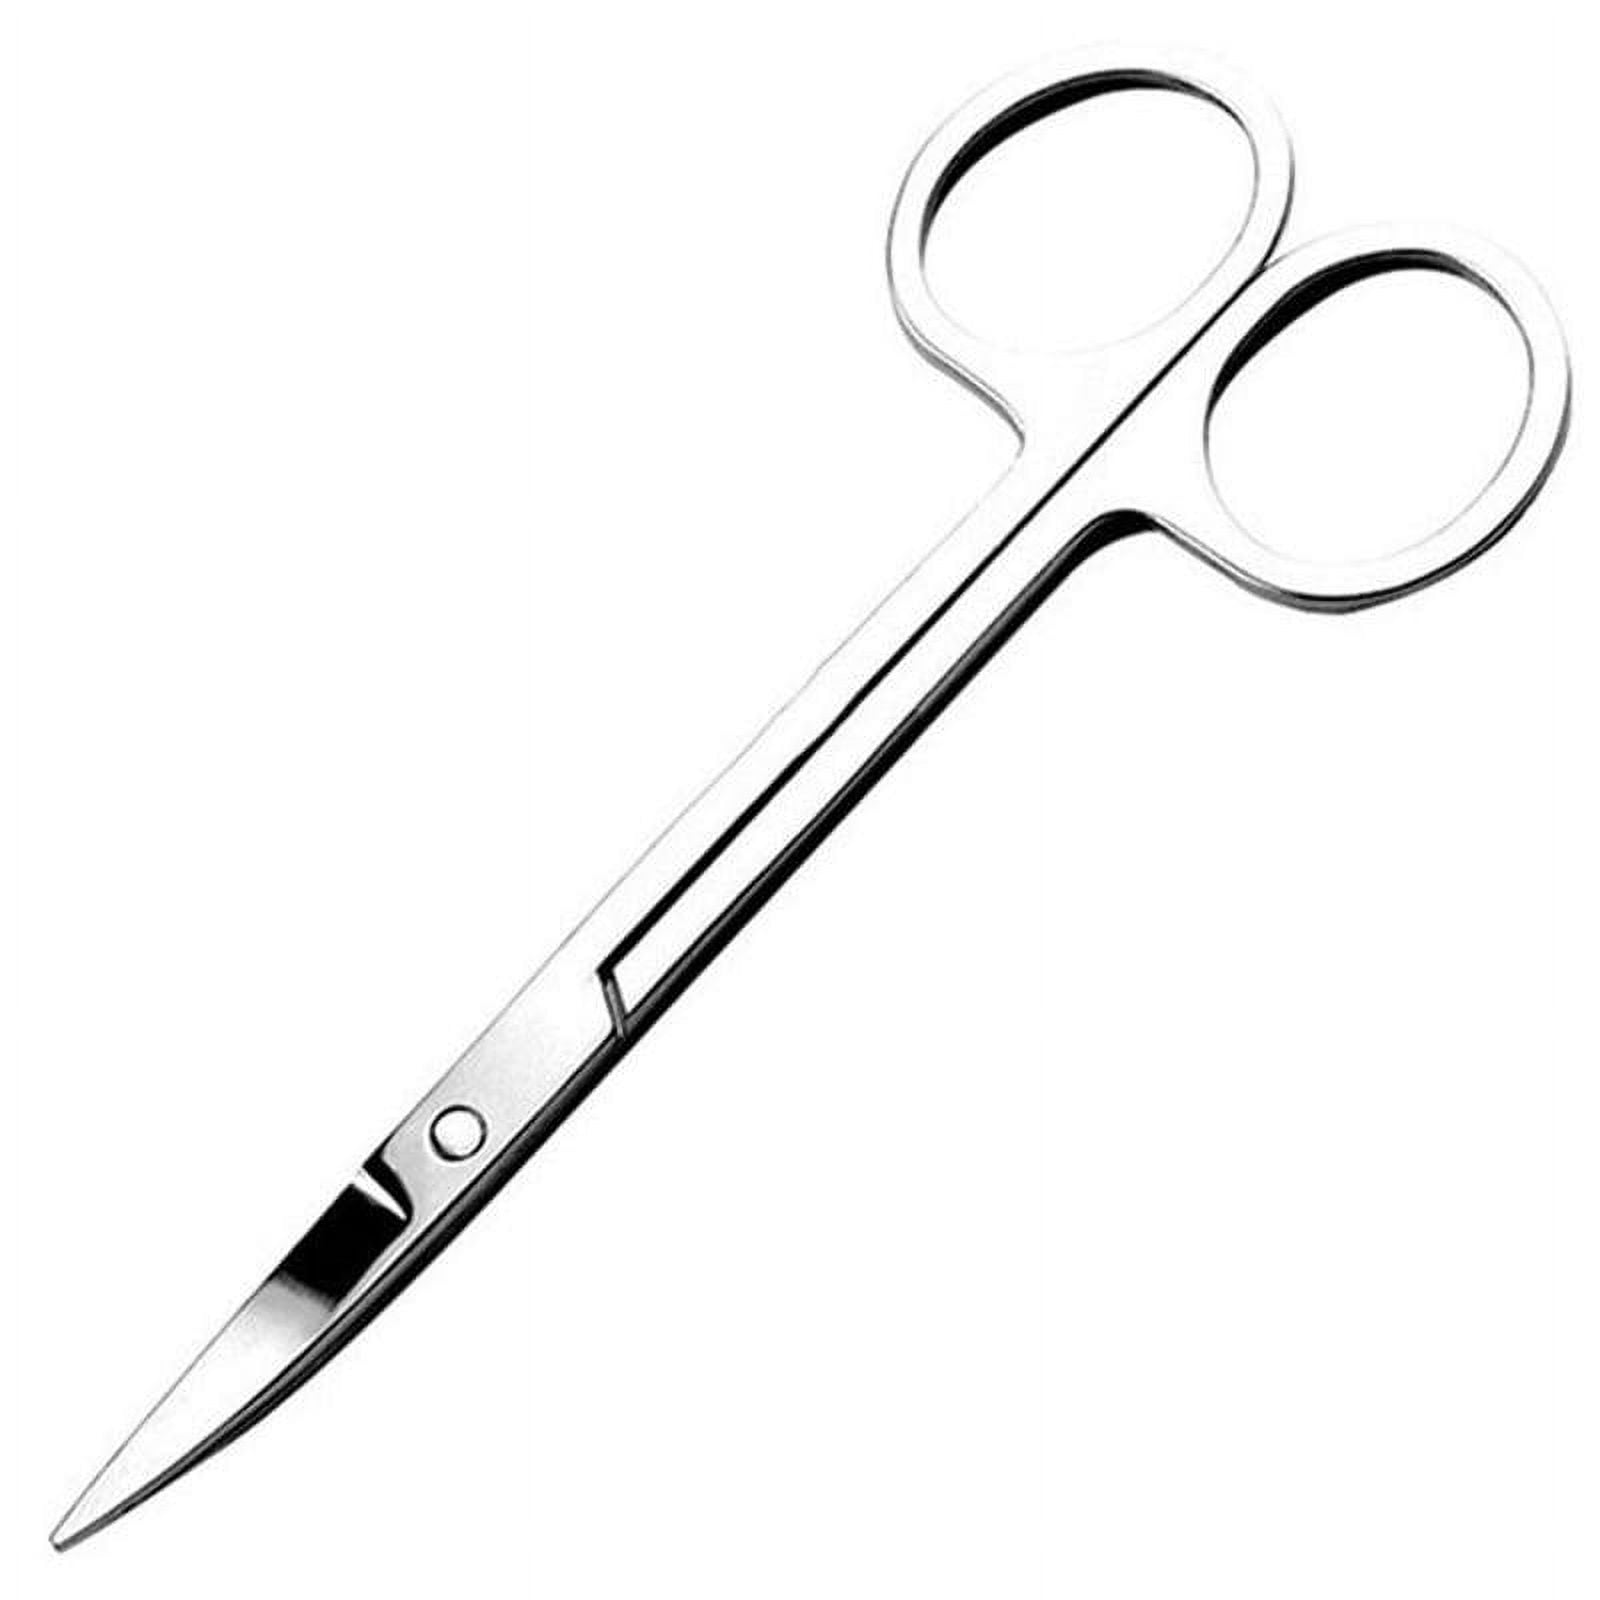 Trim Specialtycare Personal Care 10120 Scissors, 1 Count